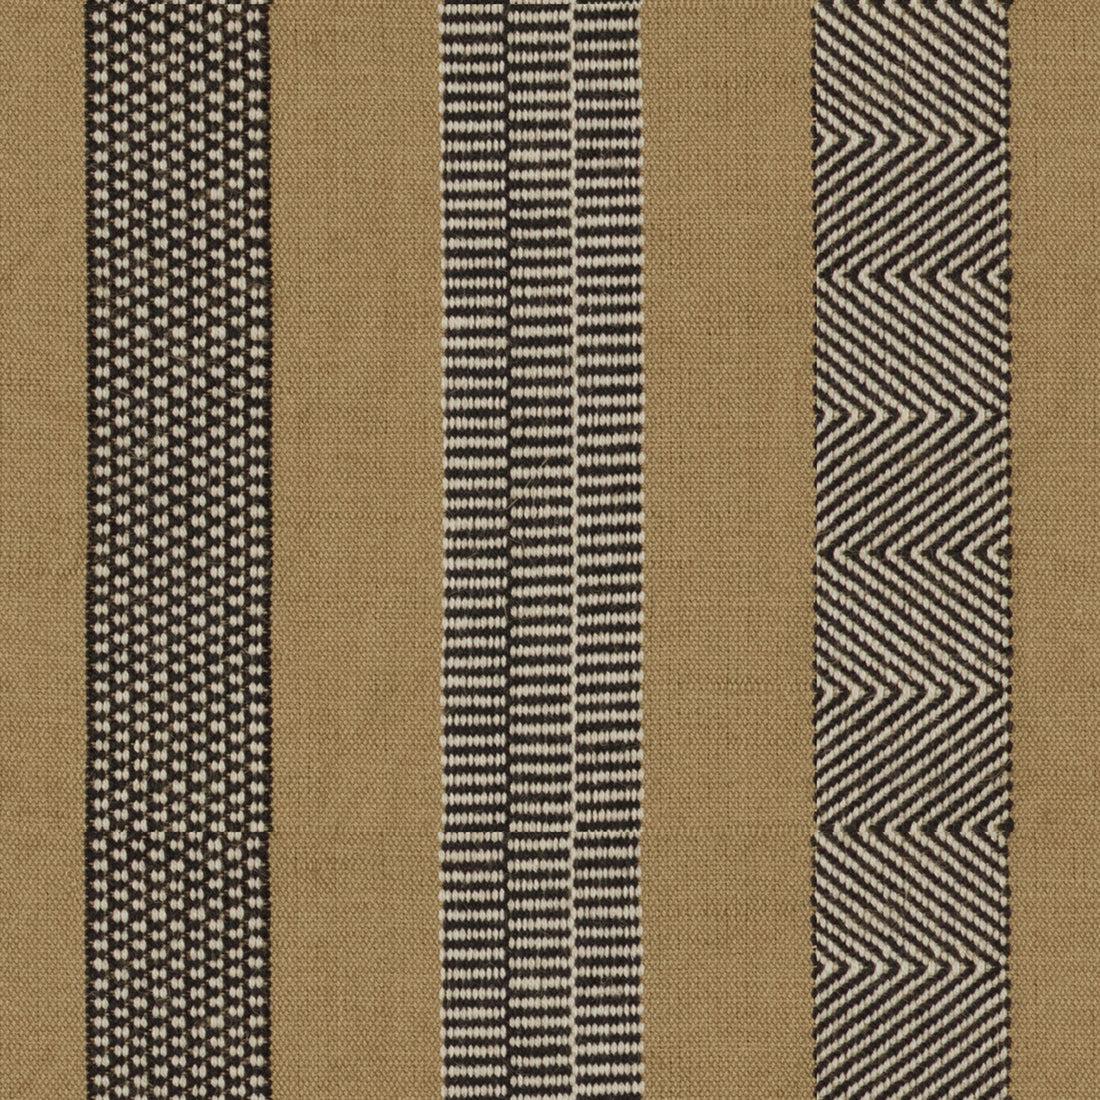 Berber fabric in camel/onyx color - pattern 2017100.168.0 - by Lee Jofa in the Oscar De La Renta III collection